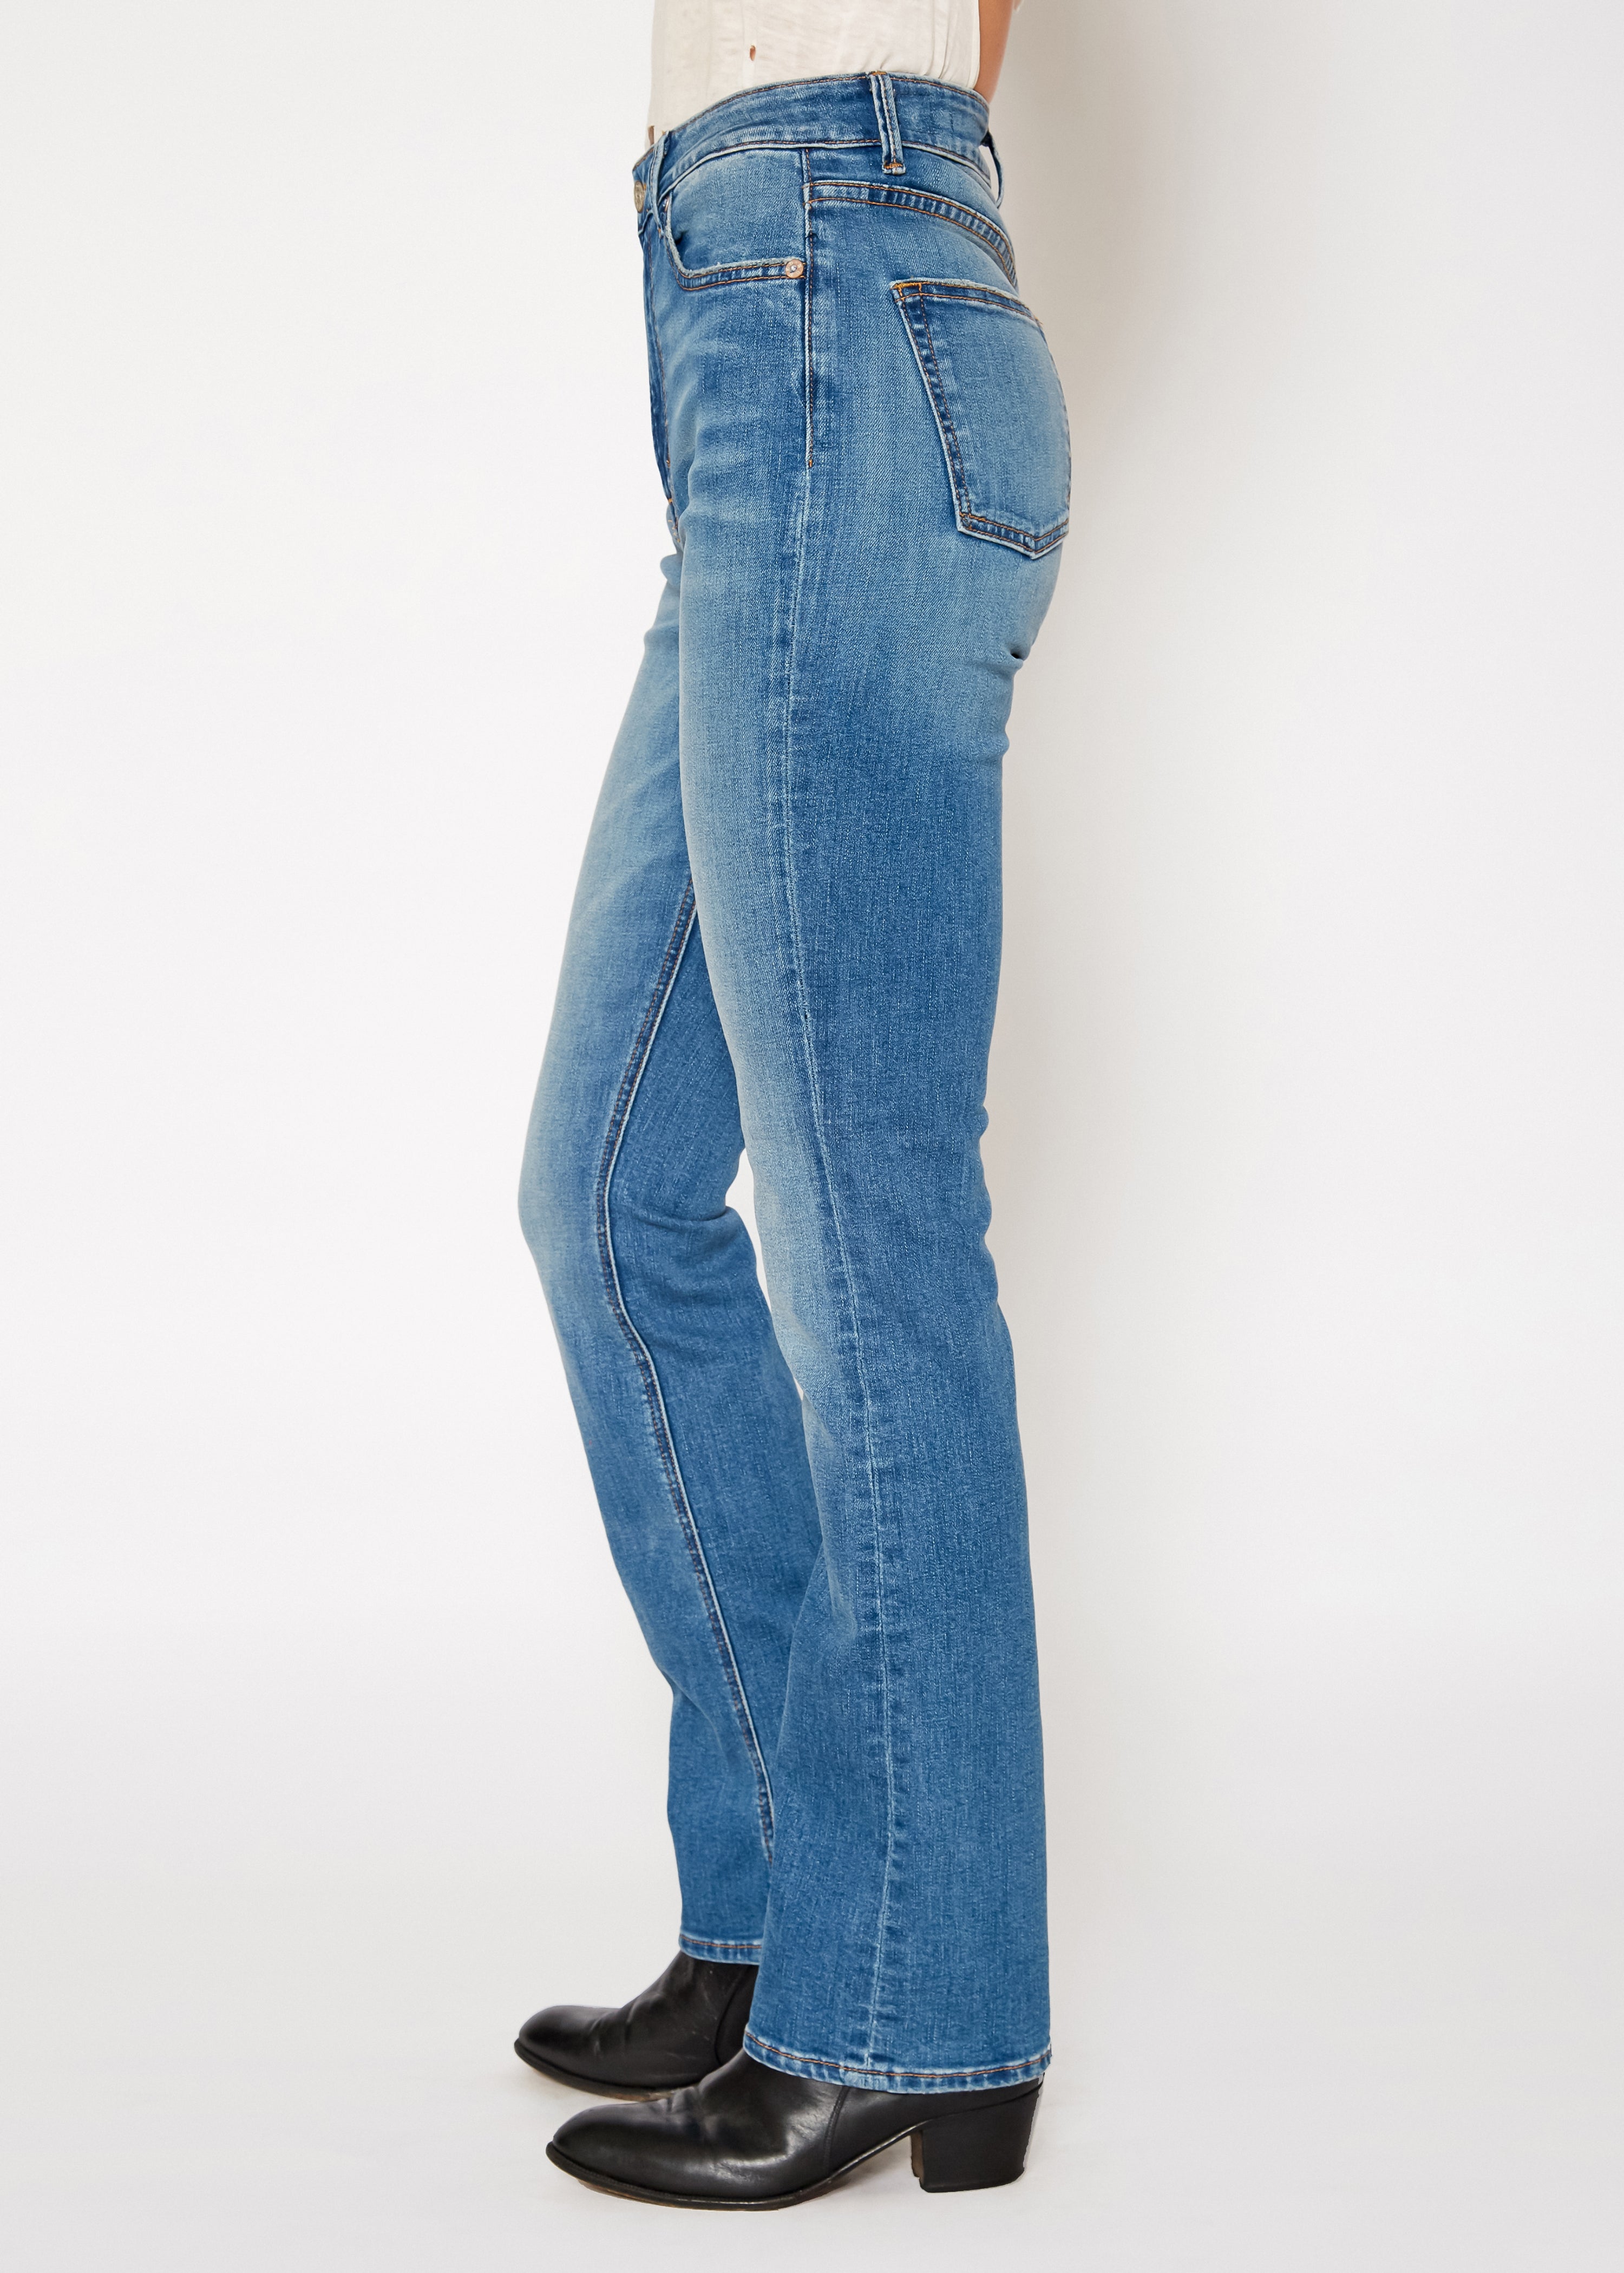 Celine Bootcut Jeans In Plaine - Noend Denim